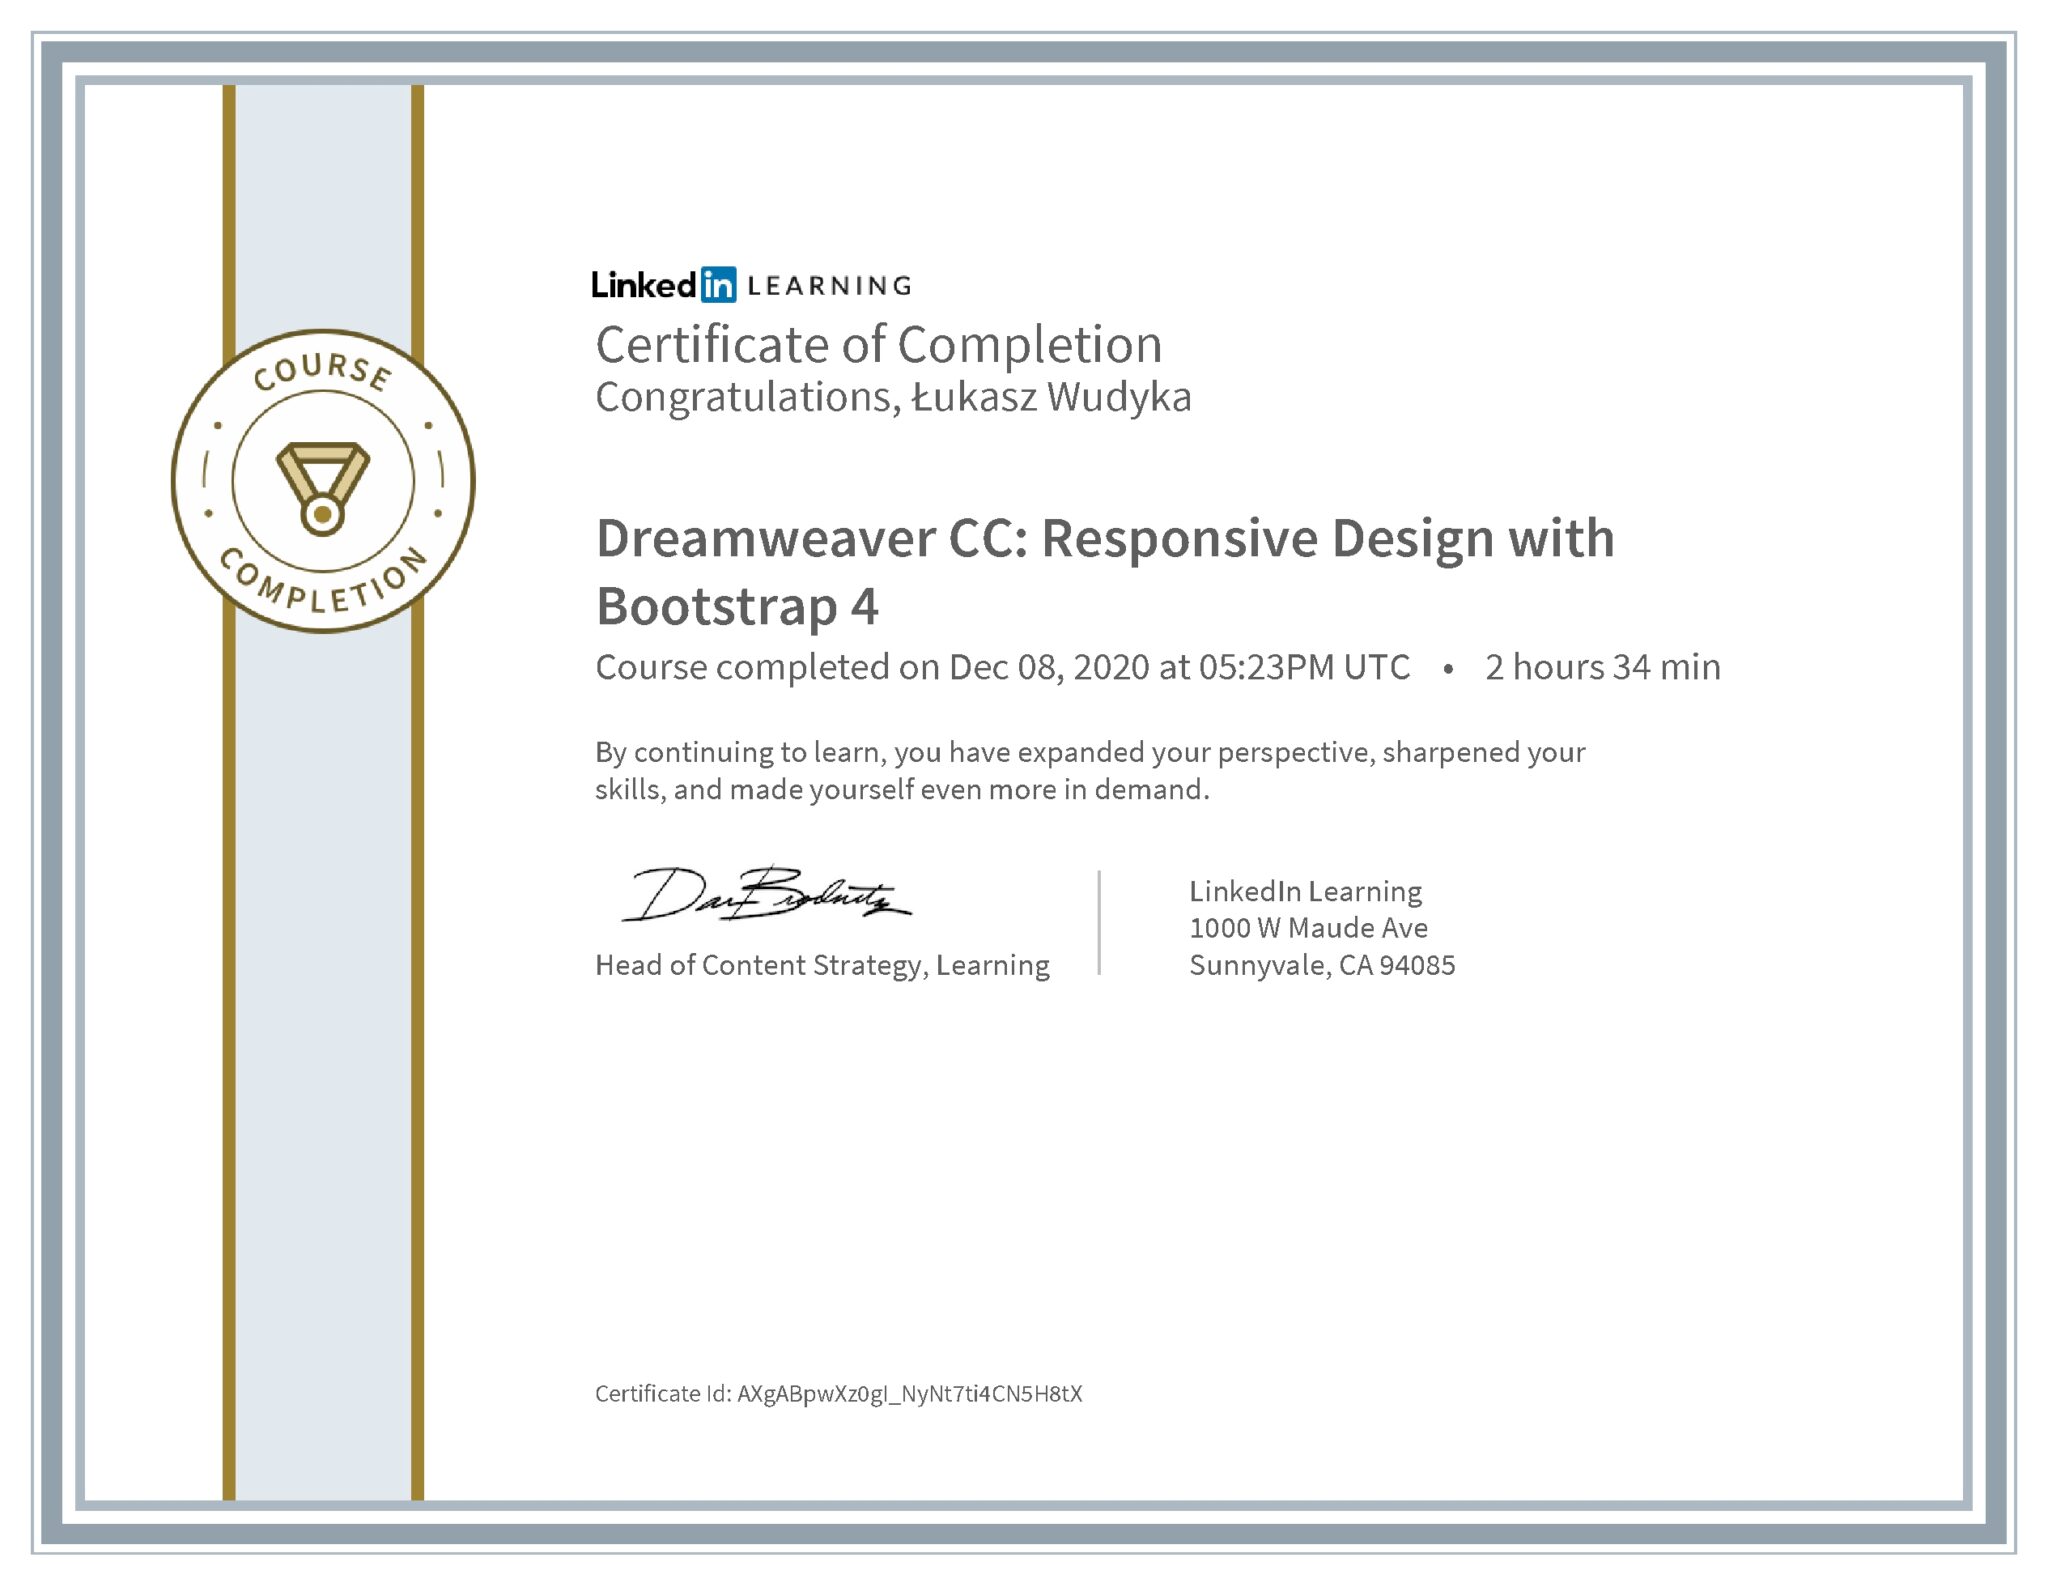 Łukasz Wudyka certyfikat LinkedIn Dreamweaver CC: Responsive Design with Bootstrap 4